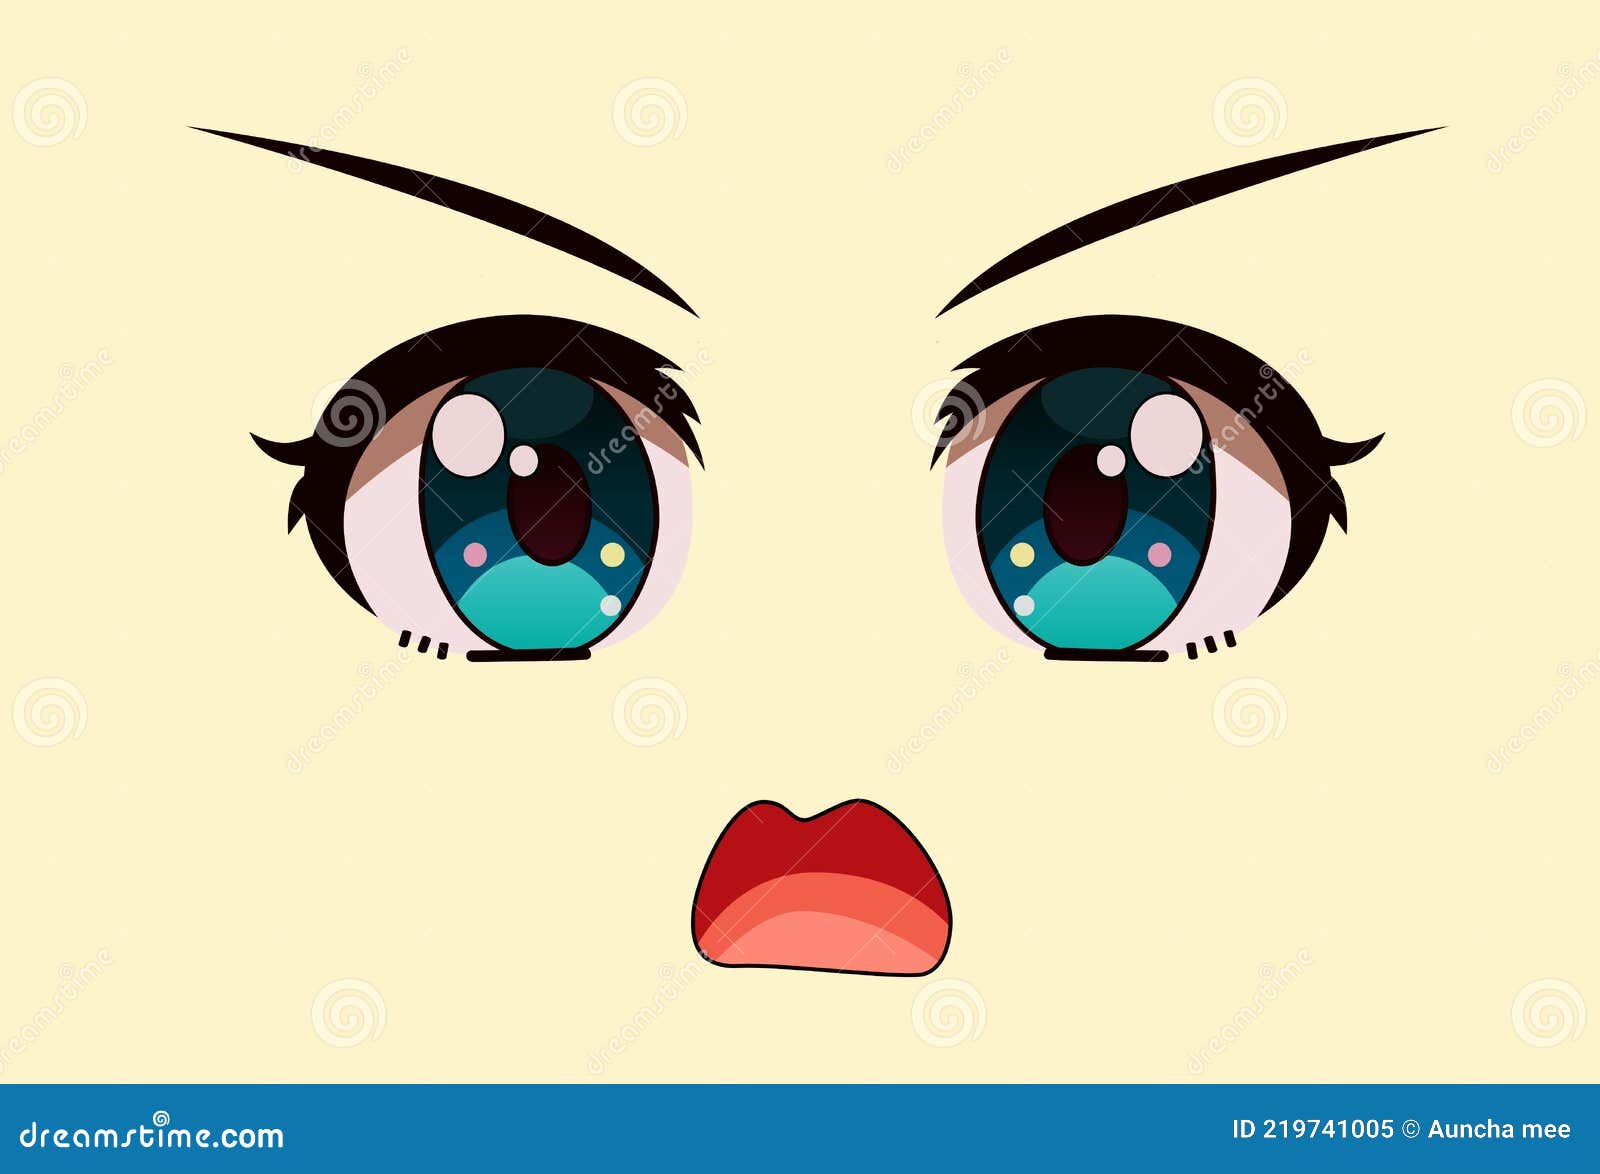 Wallpaper angry, anime boy, meliodas desktop wallpaper, hd image, picture,  background, c1e02c | wallpapersmug